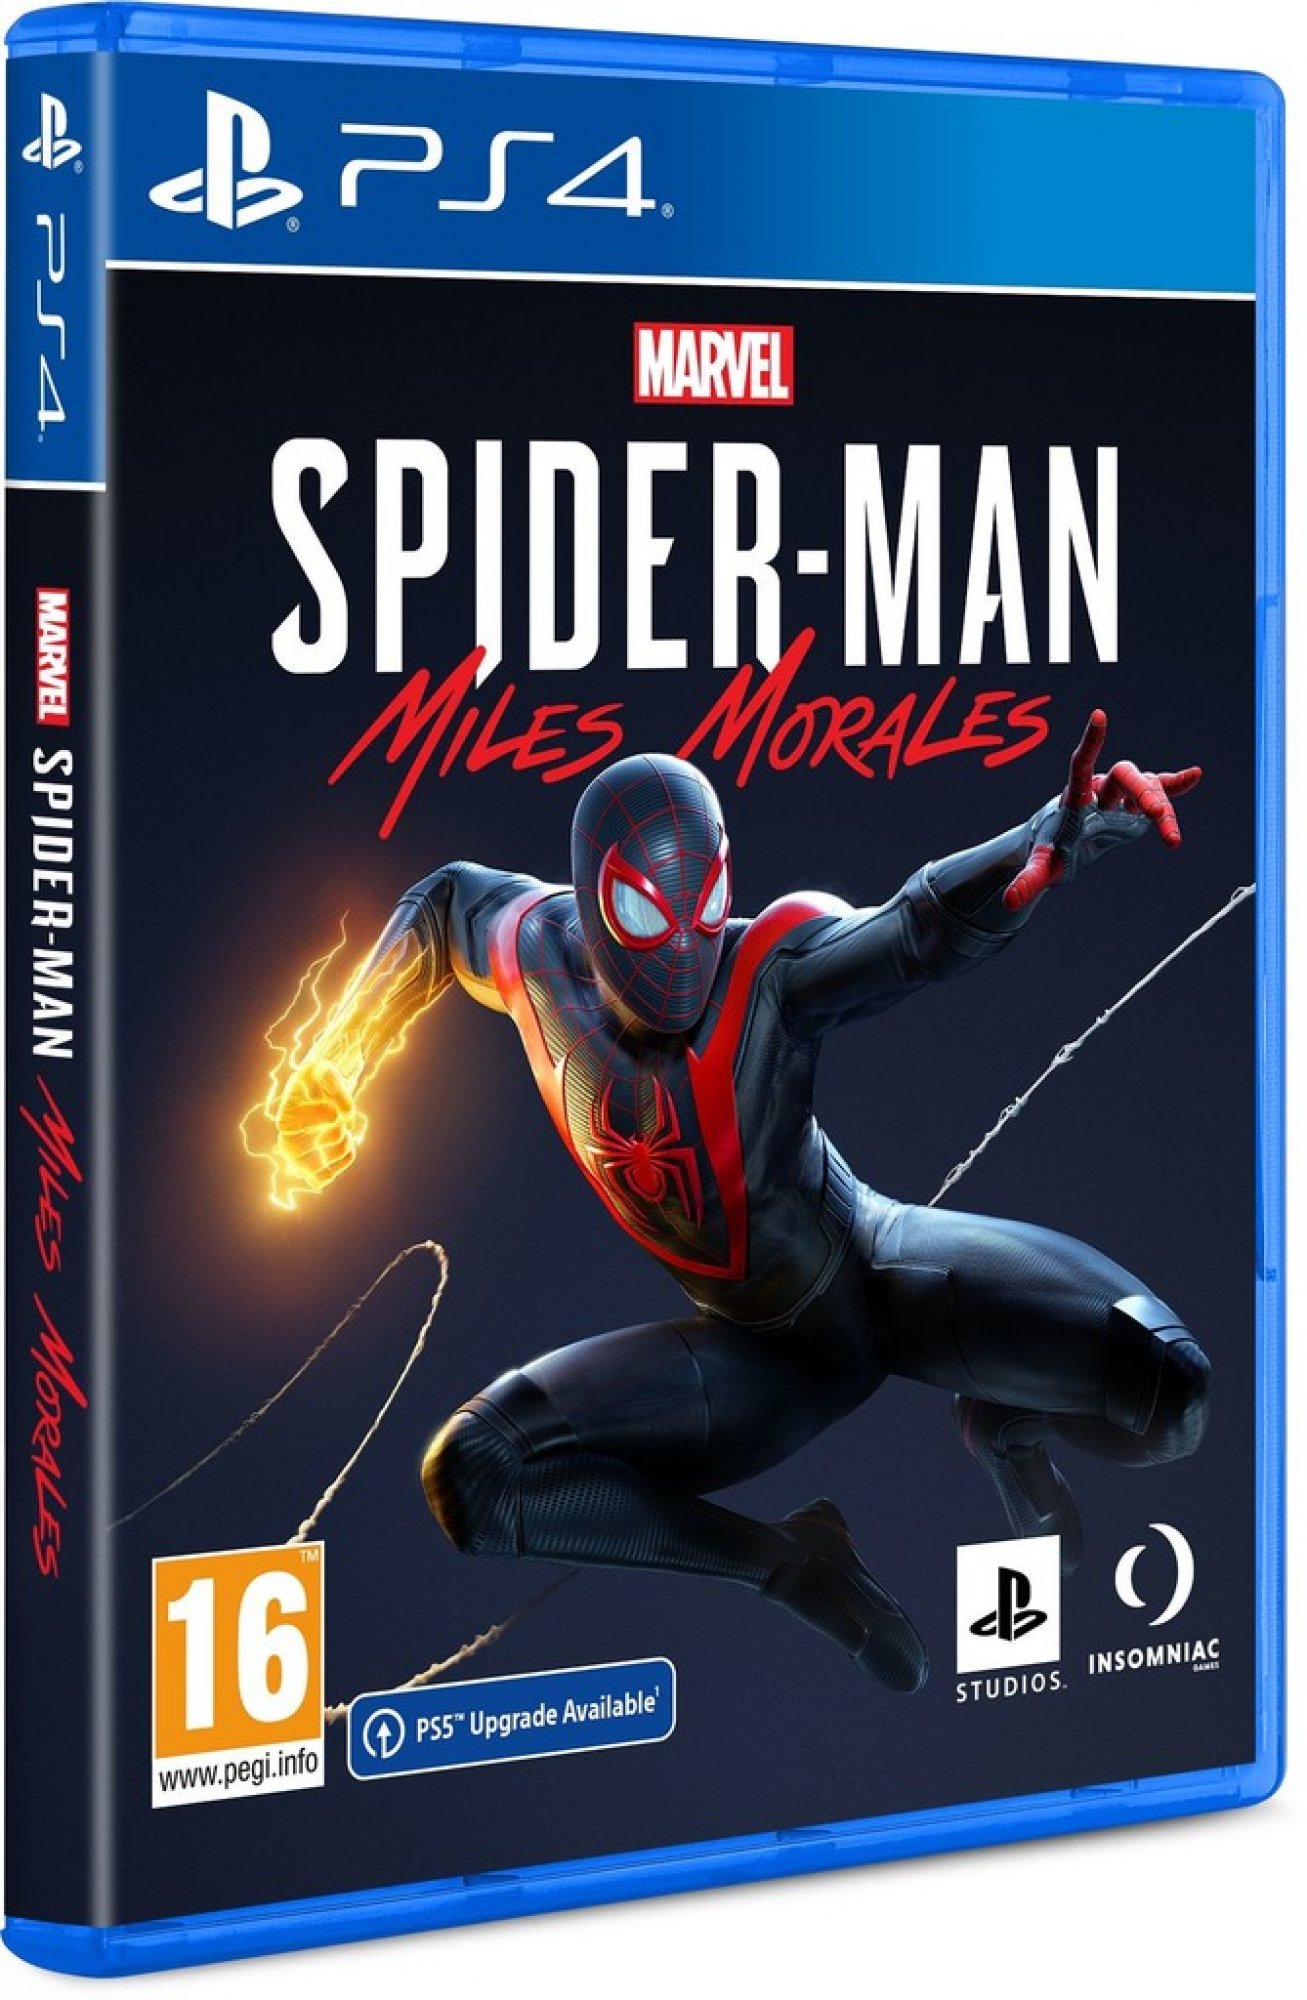 PS4 - Marvel"s Spider-Man MMorales